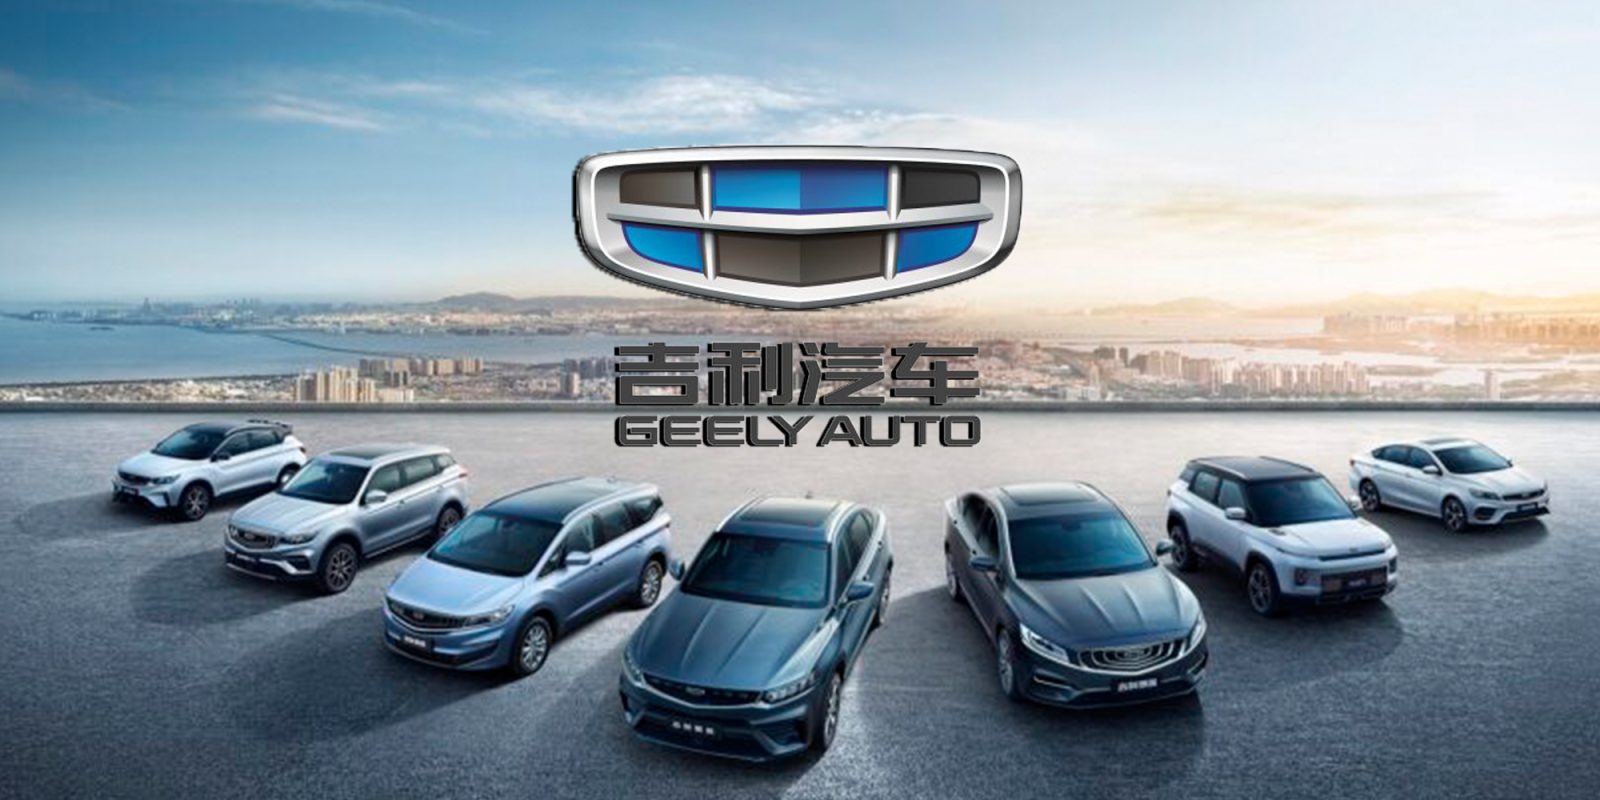 DBS: China Auto – <News alert> Auto policies to stimulate vehicle sales